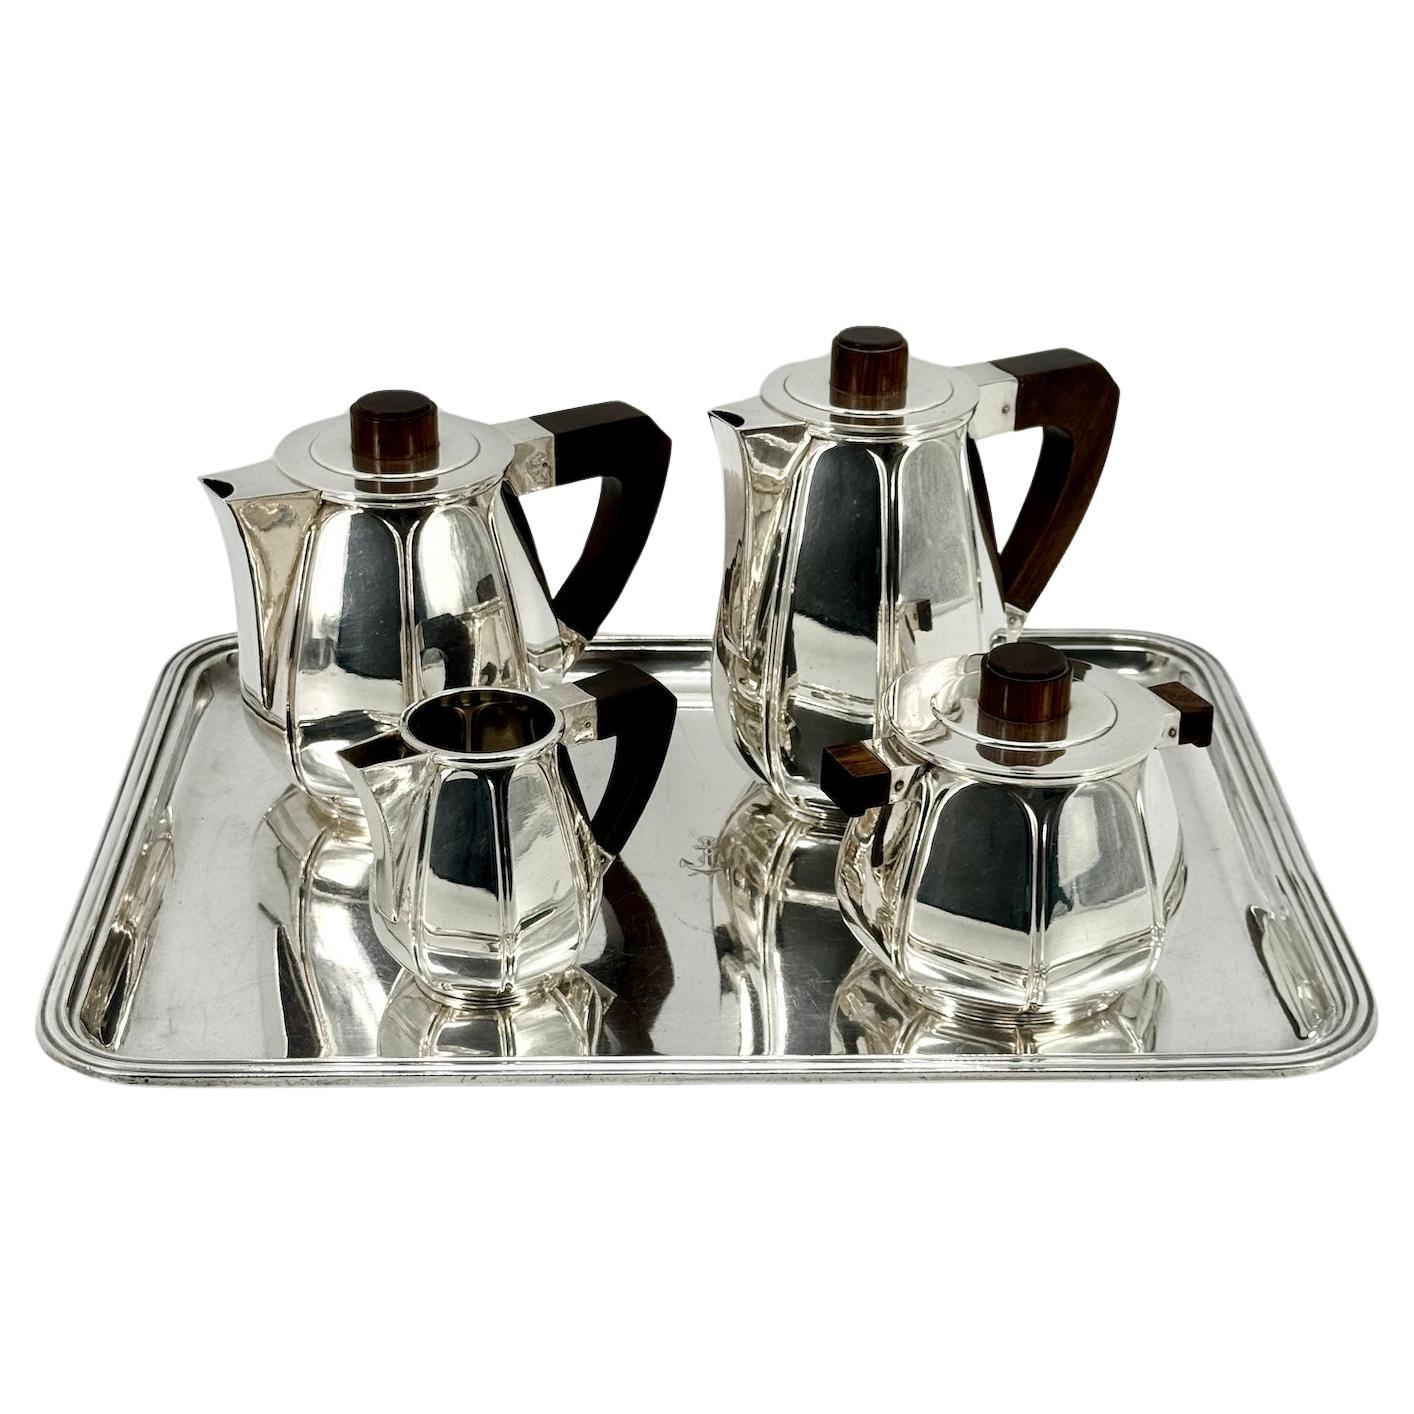 Silver Plate Tea Coffee Set by Christofle Model Liberia 1927 on Ercuis Tray 